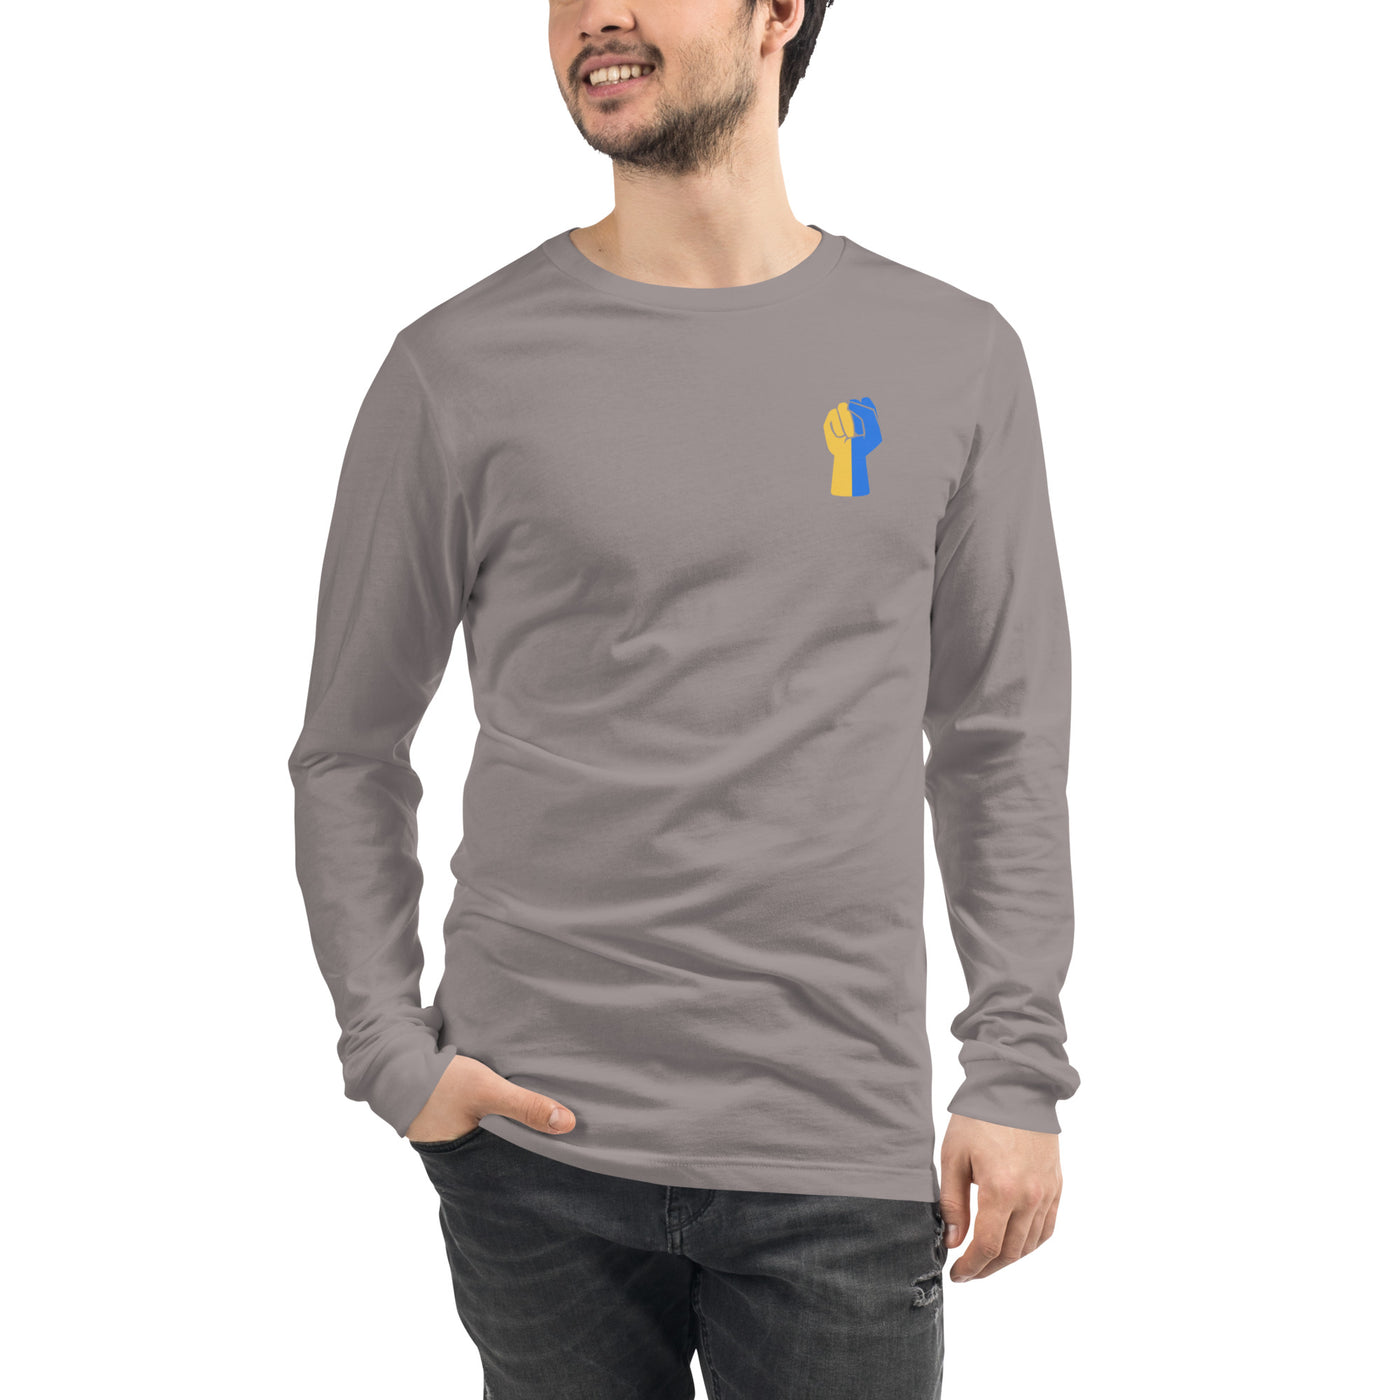 Raise Your Fist for Ukraine Long Sleeve Shirt Print